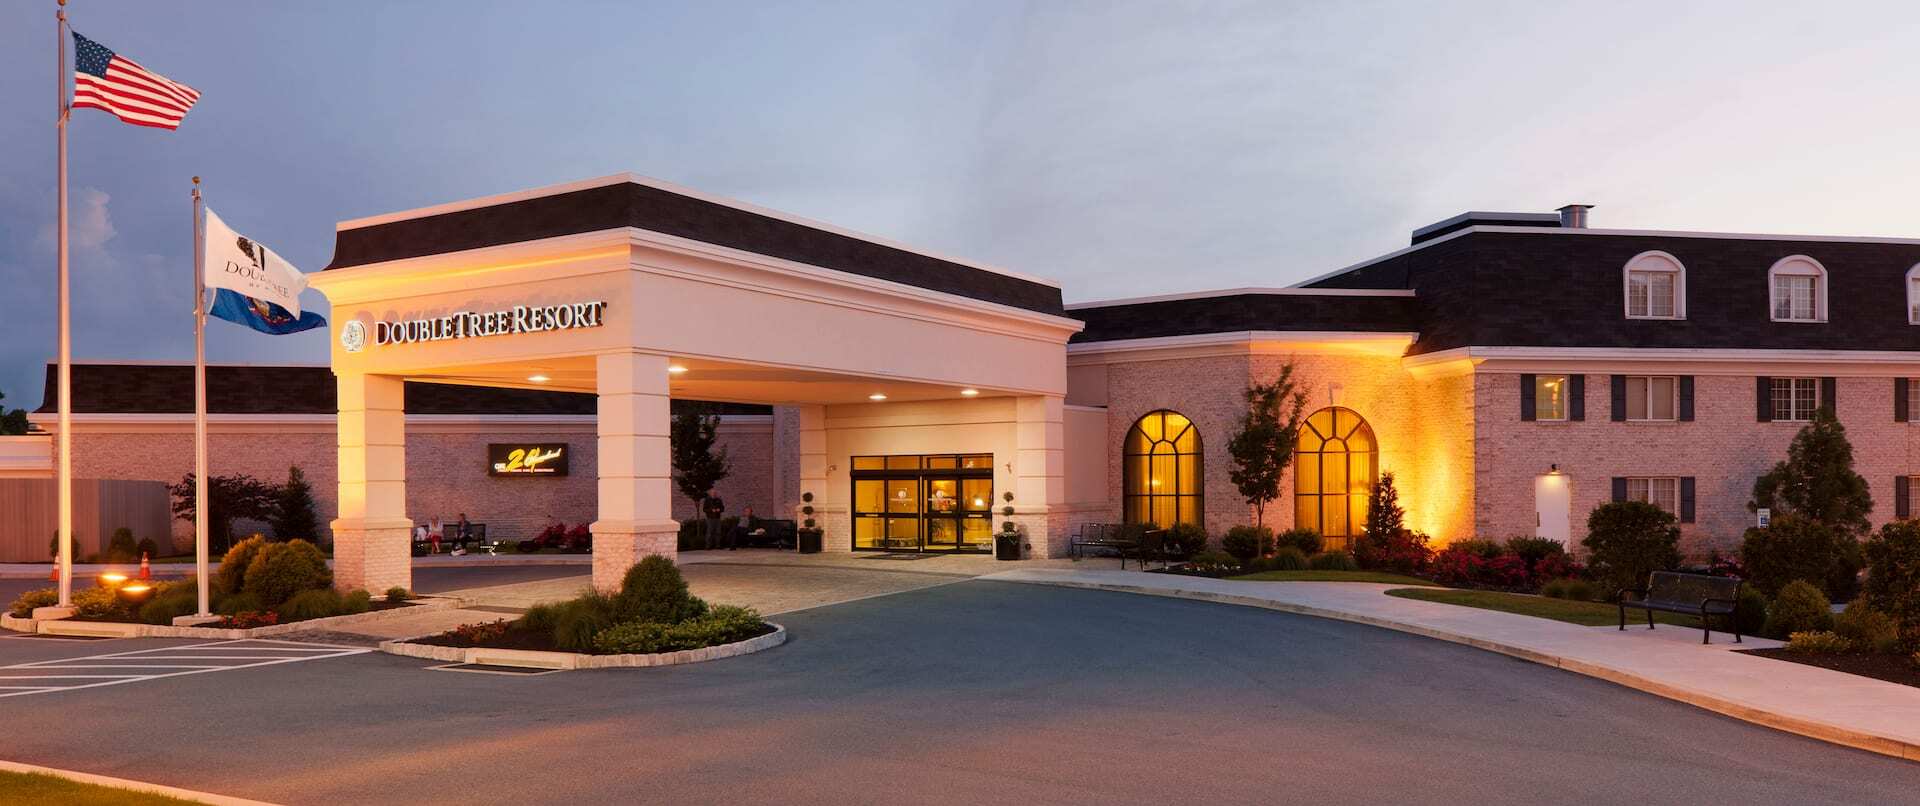 Photo of DoubleTree Resort by Hilton Hotel Lancaster, Lancaster, PA